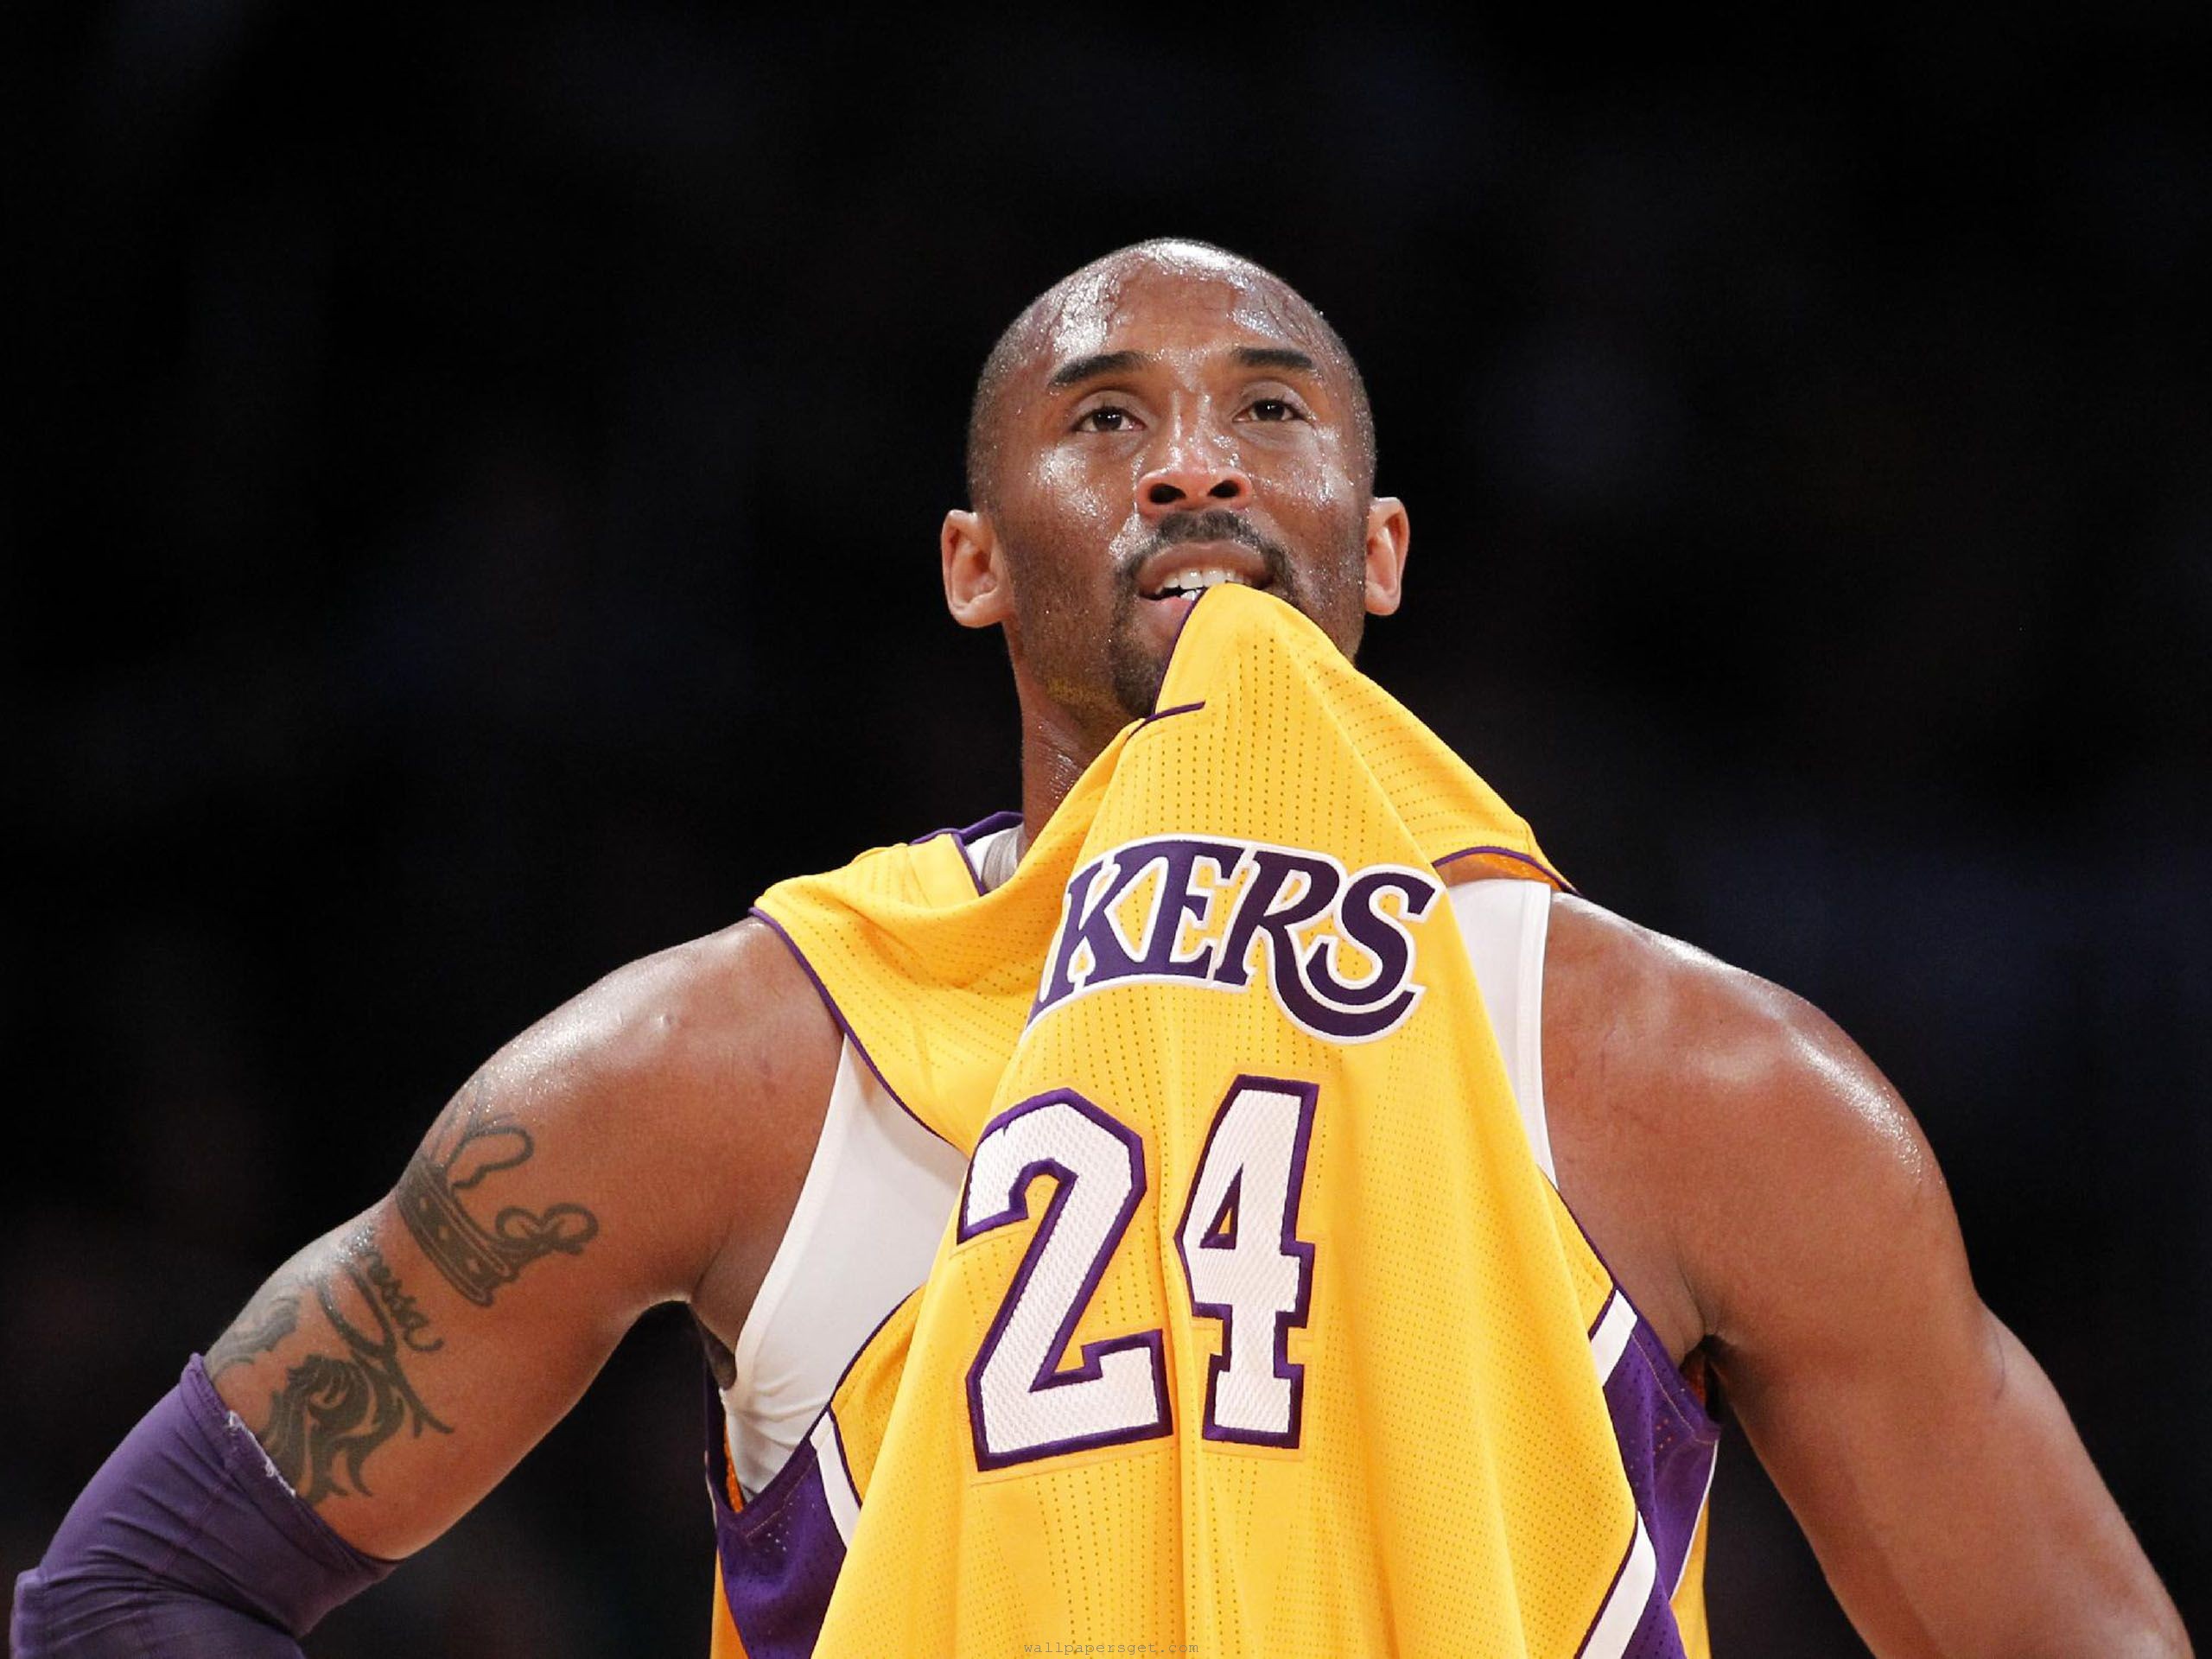 Photos: Kobe Bryant's Memorable Moments